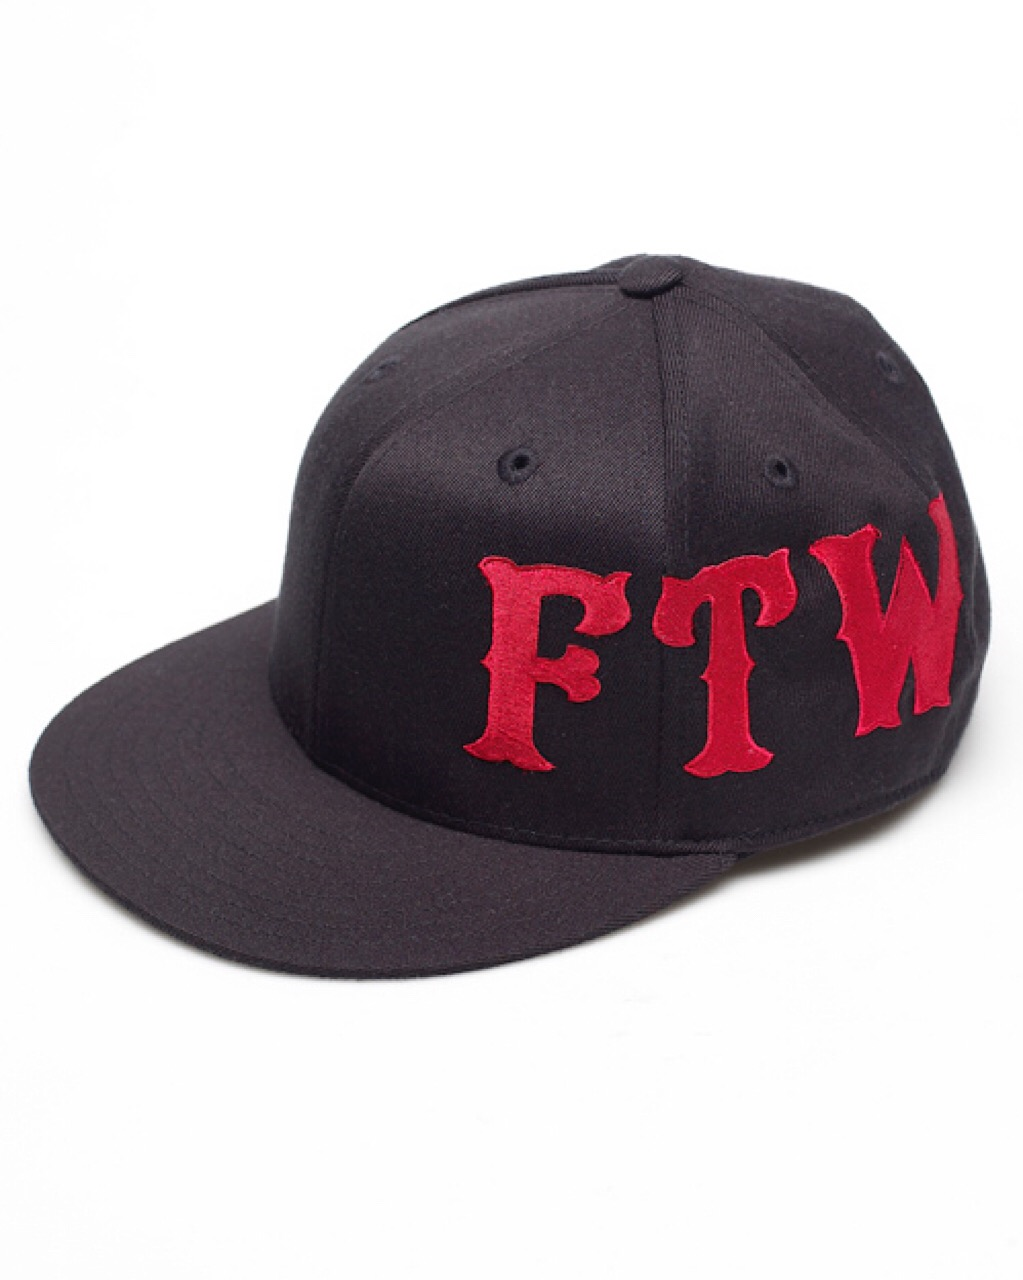 Bill Clothing, FTW Hat Large 415 - Flat